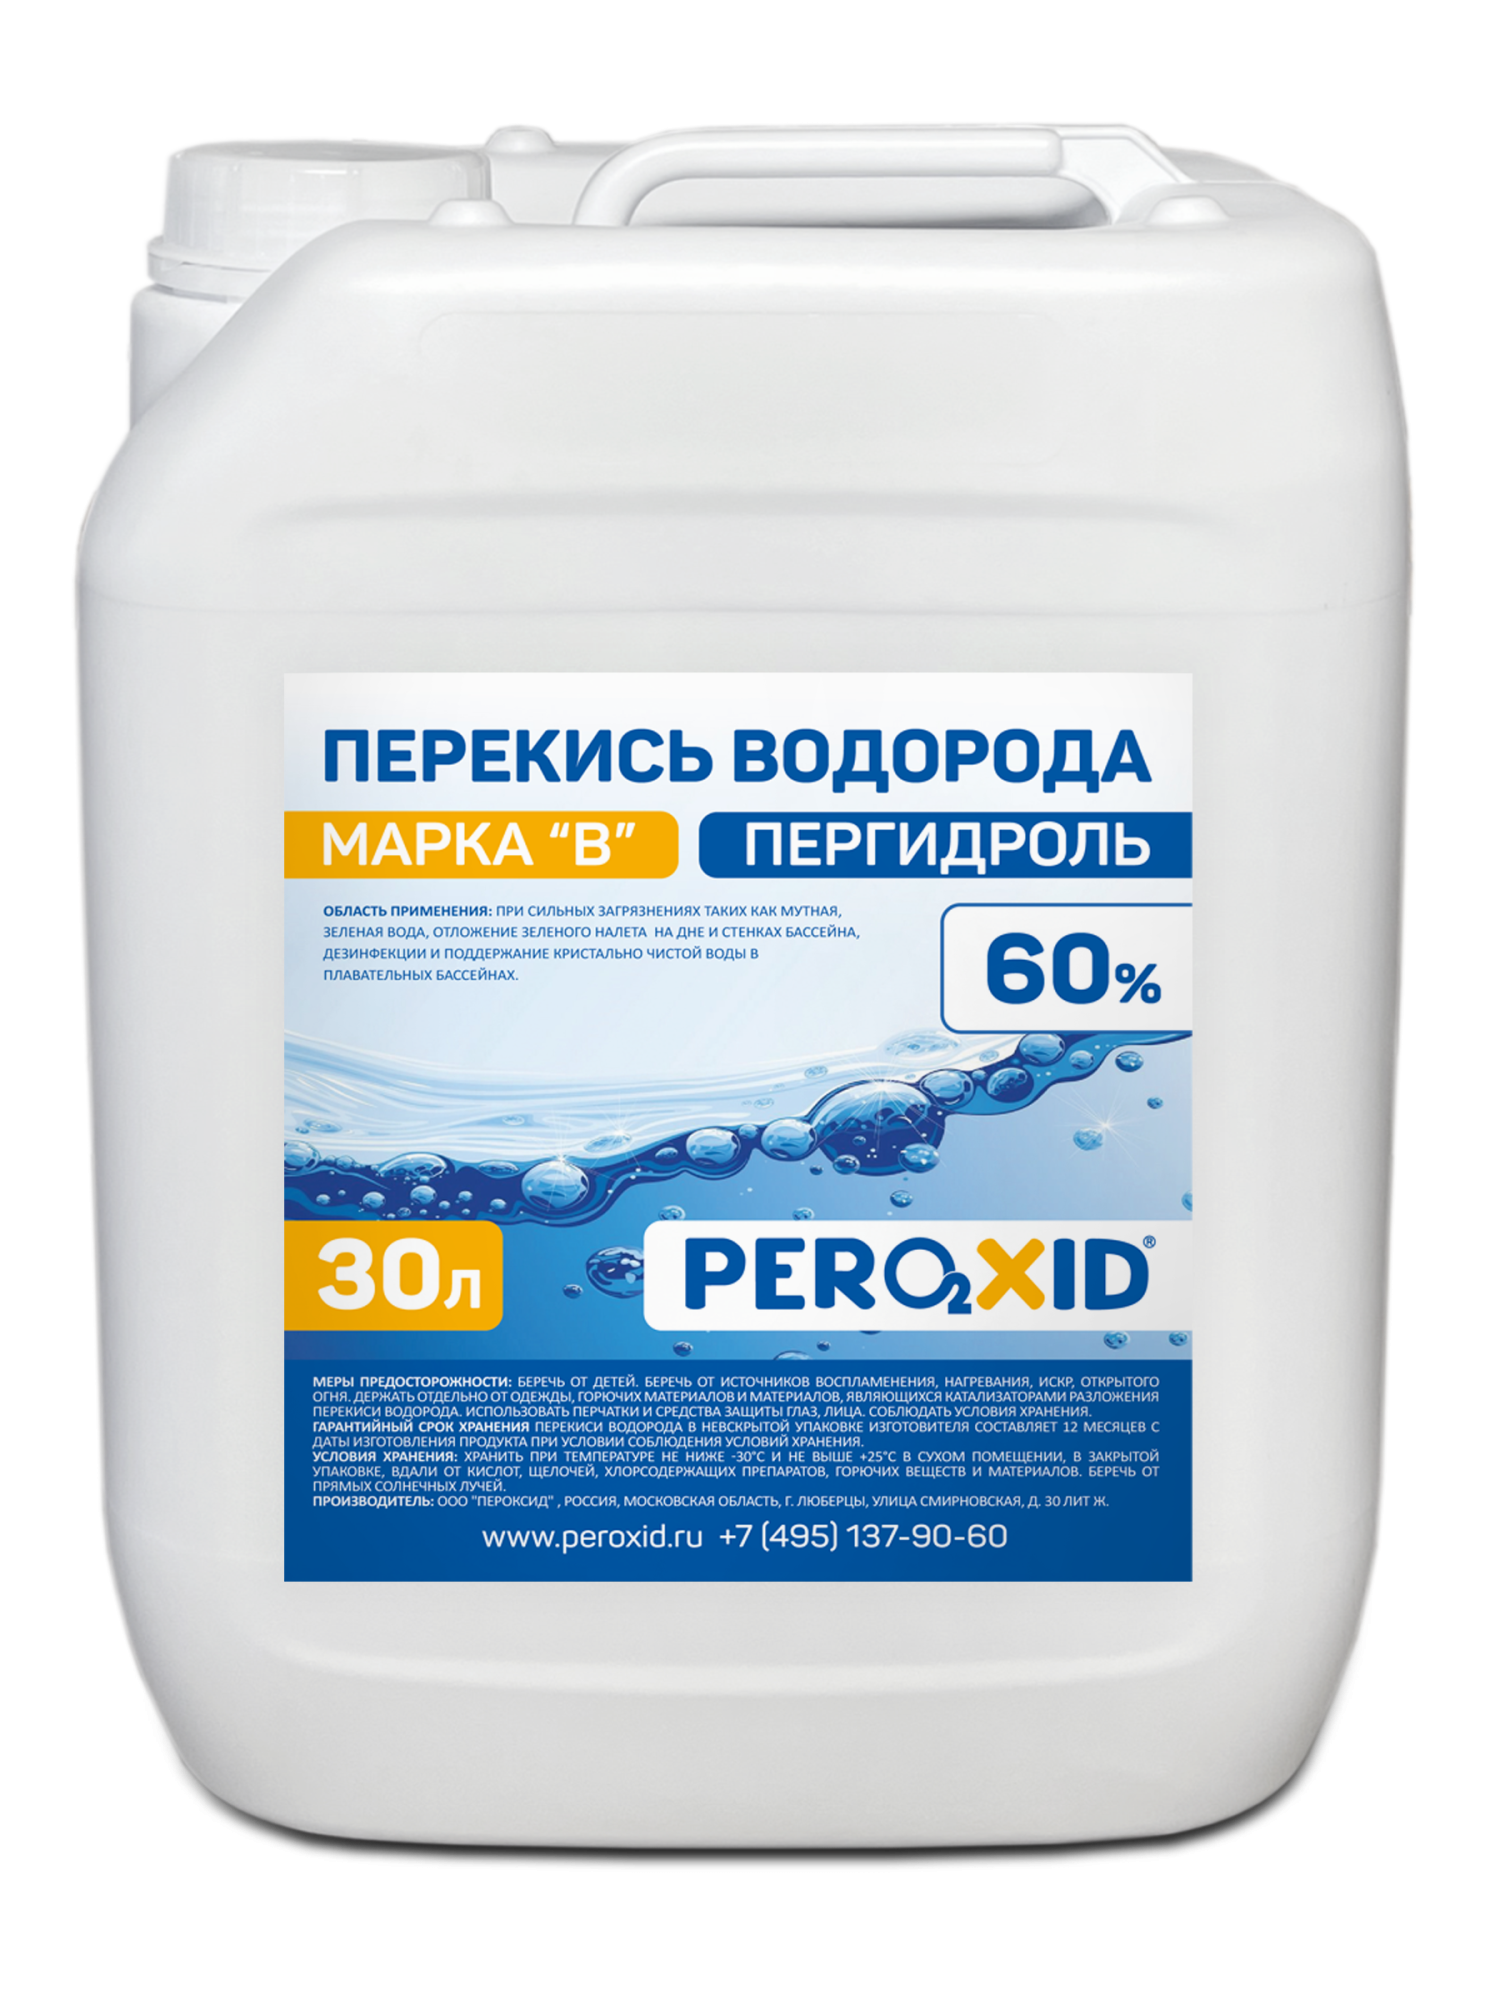 Перекись водорода (пергидроль) PEROXID 60% марка В ТУ 2123-002-25665344-2008 30 л/34 кг